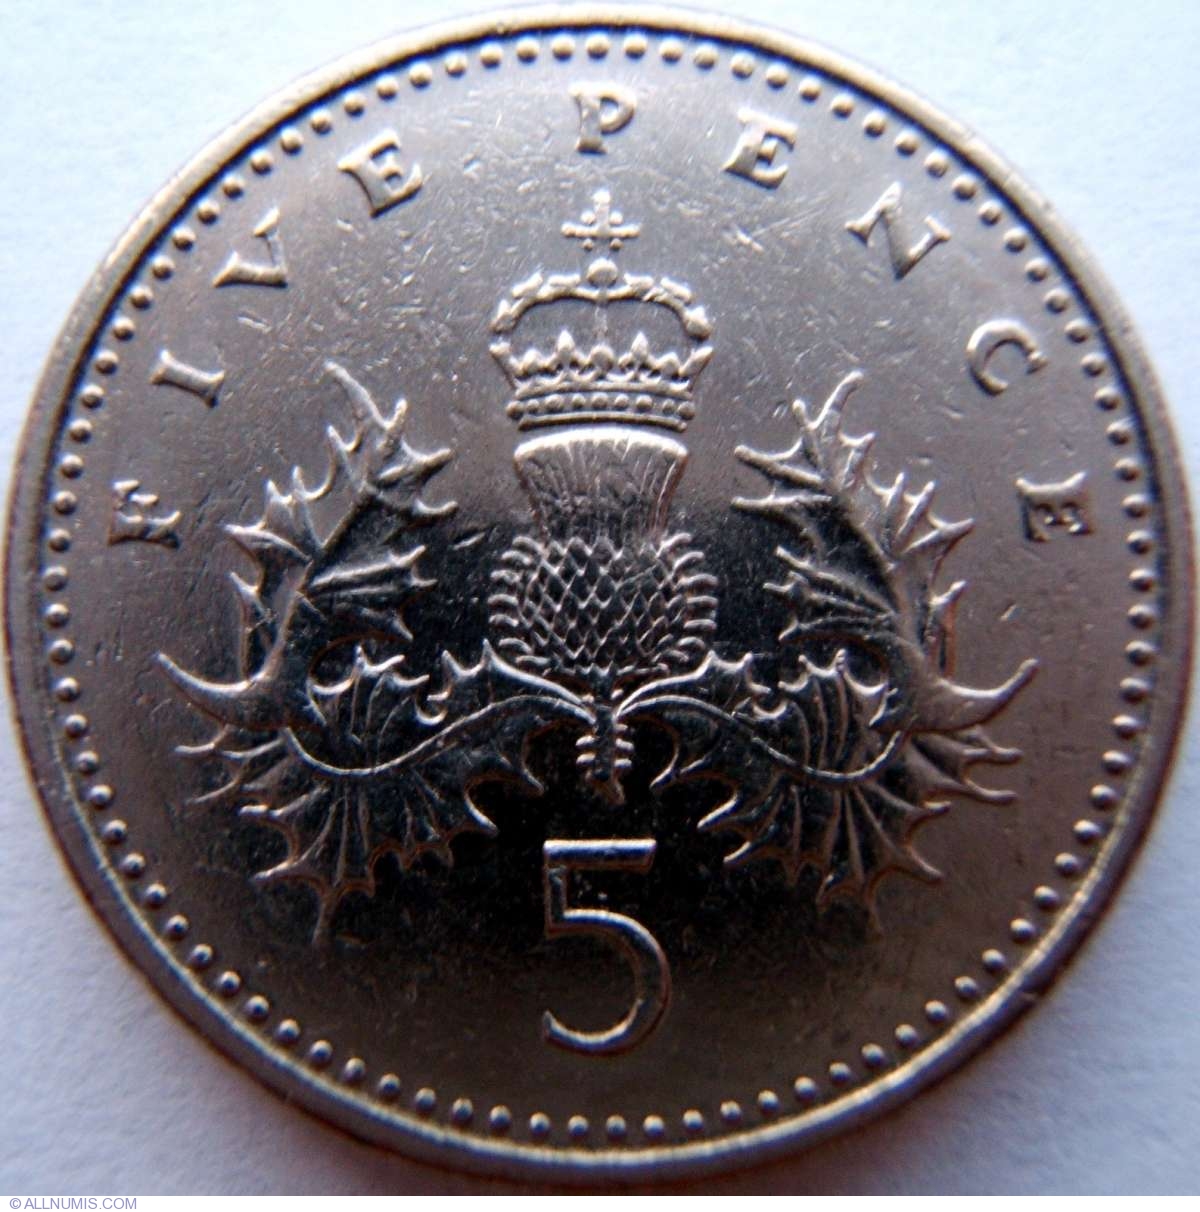 5 Pence 1990, Elizabeth II (1952-present) - Great Britain - Coin - 1118